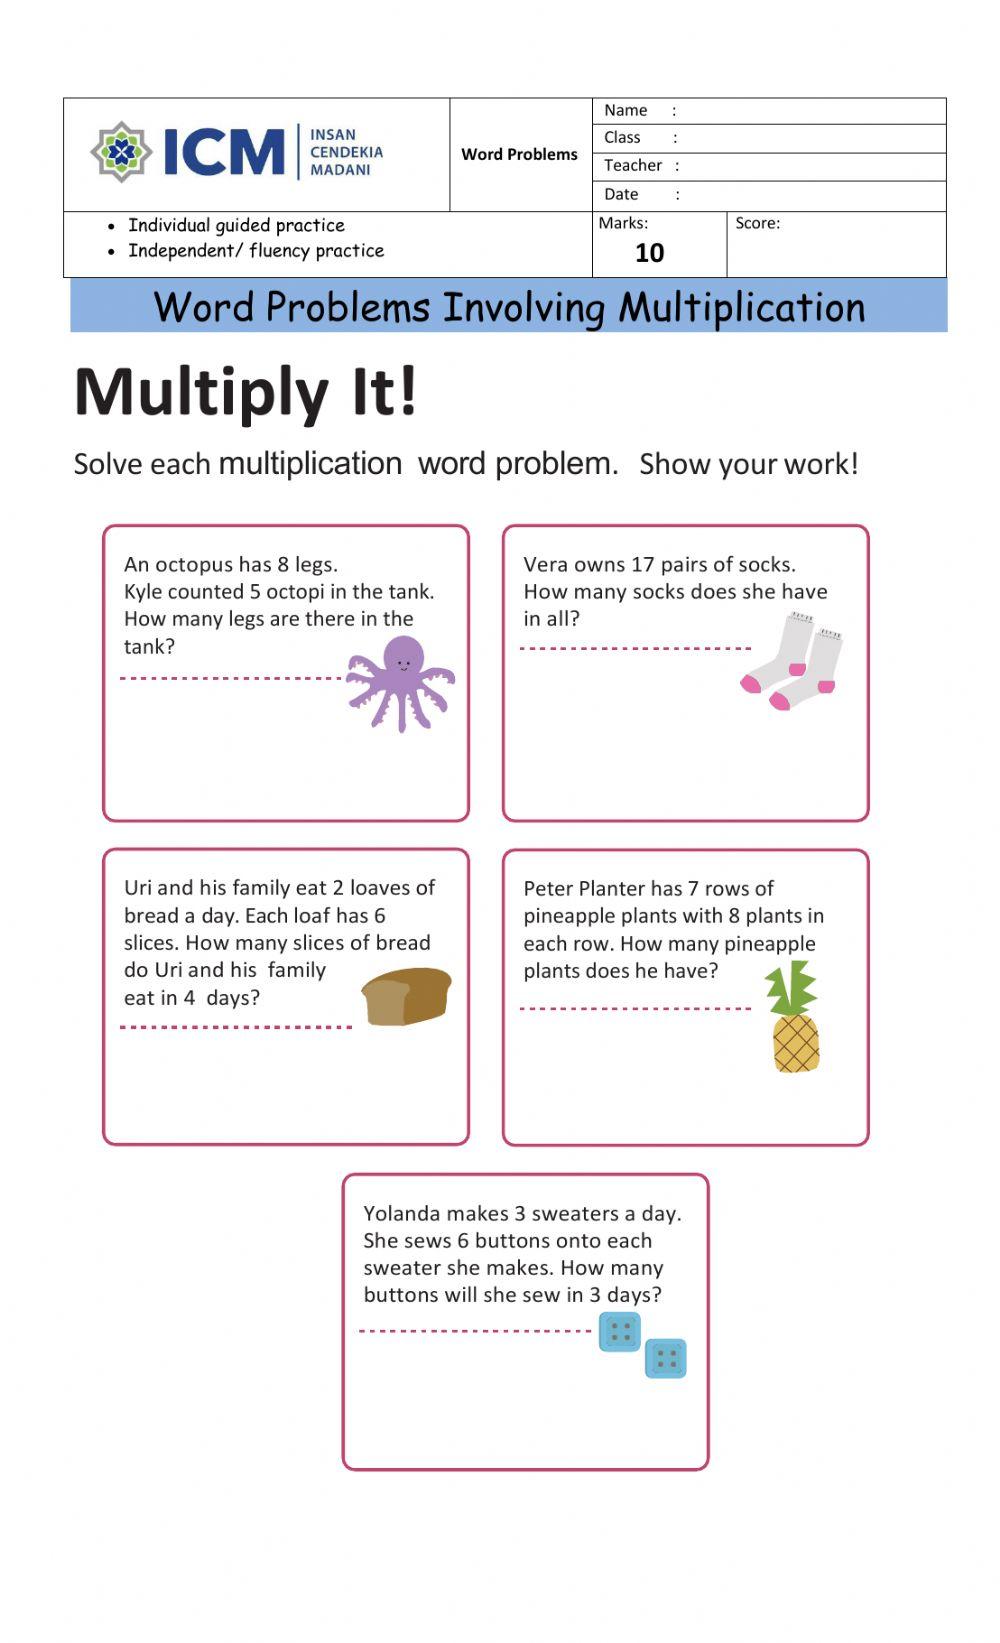 Solving word problems involving multiplication